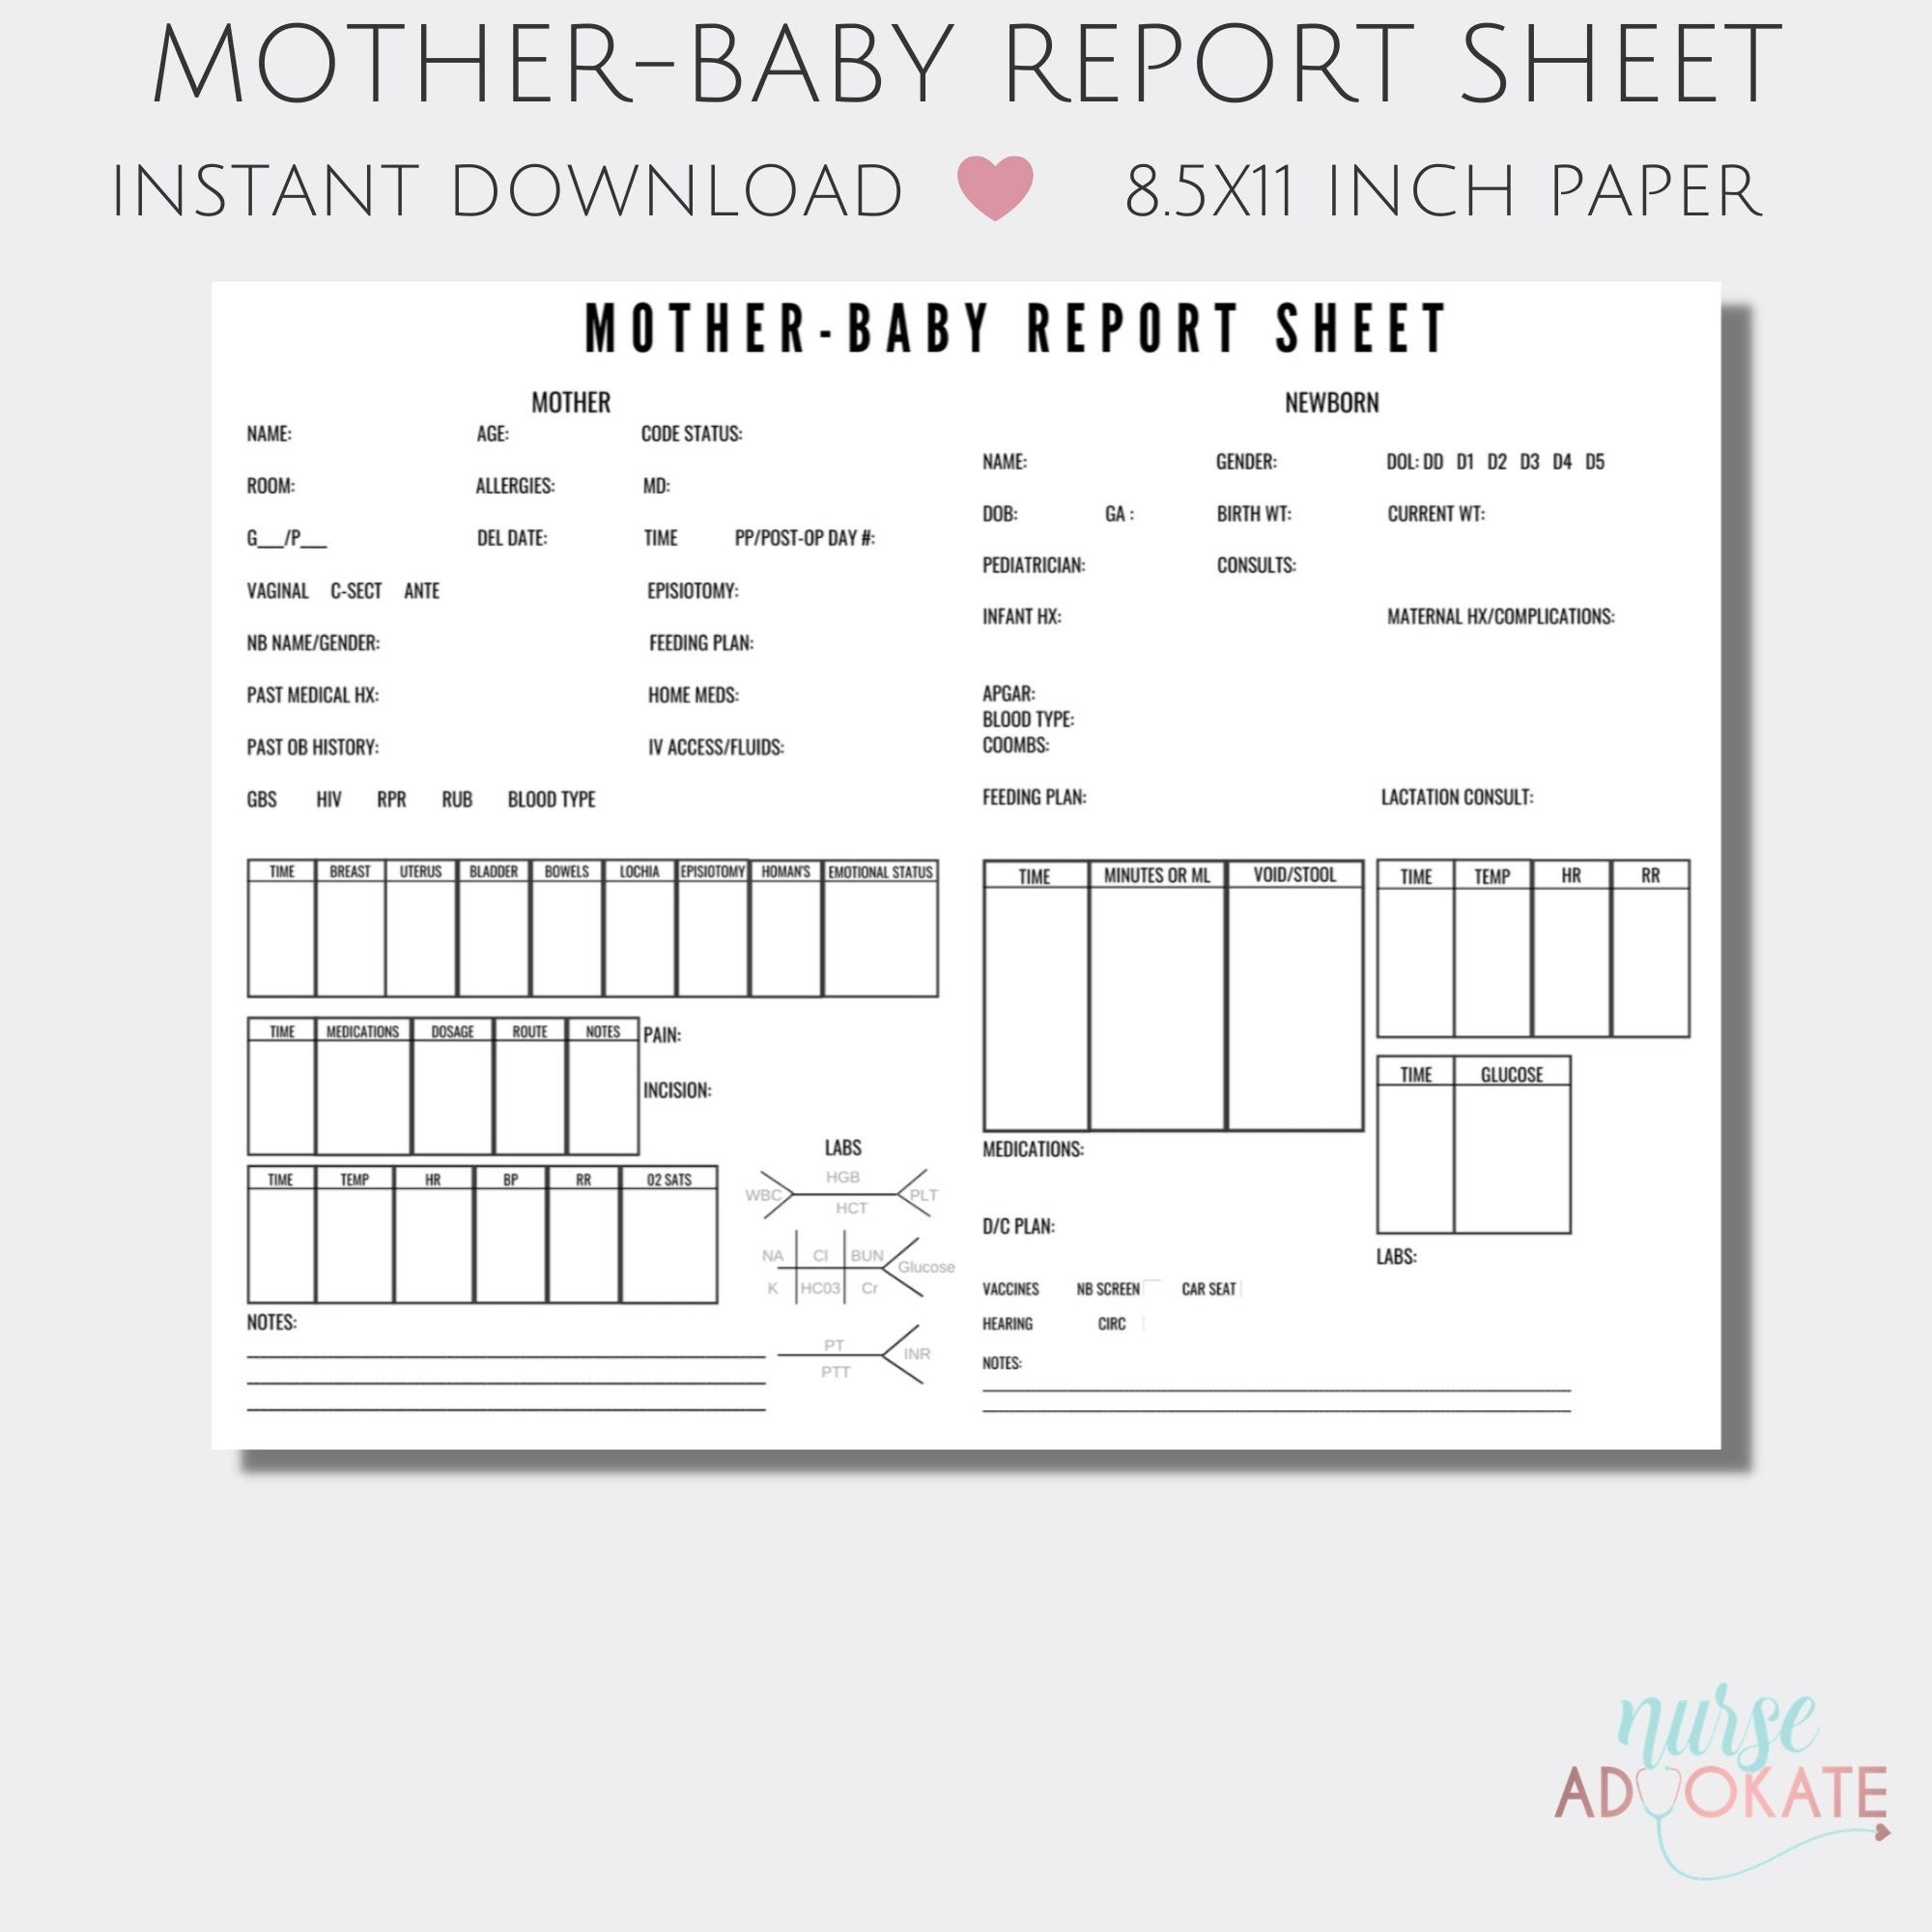 Mother-baby RN Report Sheet Template. SBAR Handoff. Full - Etsy